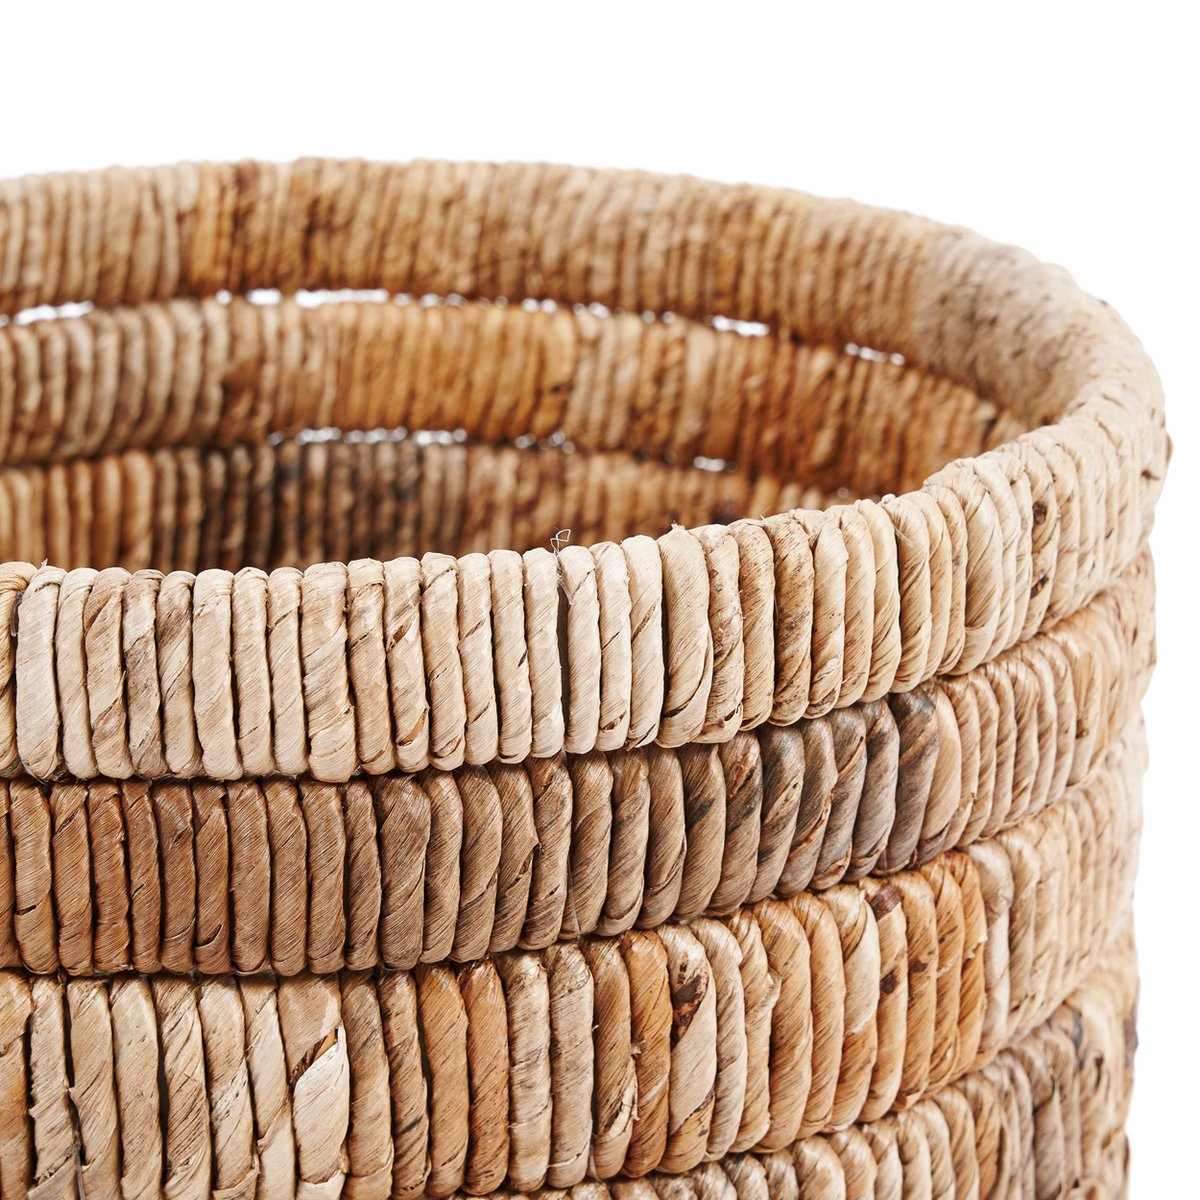 The Chuma basket